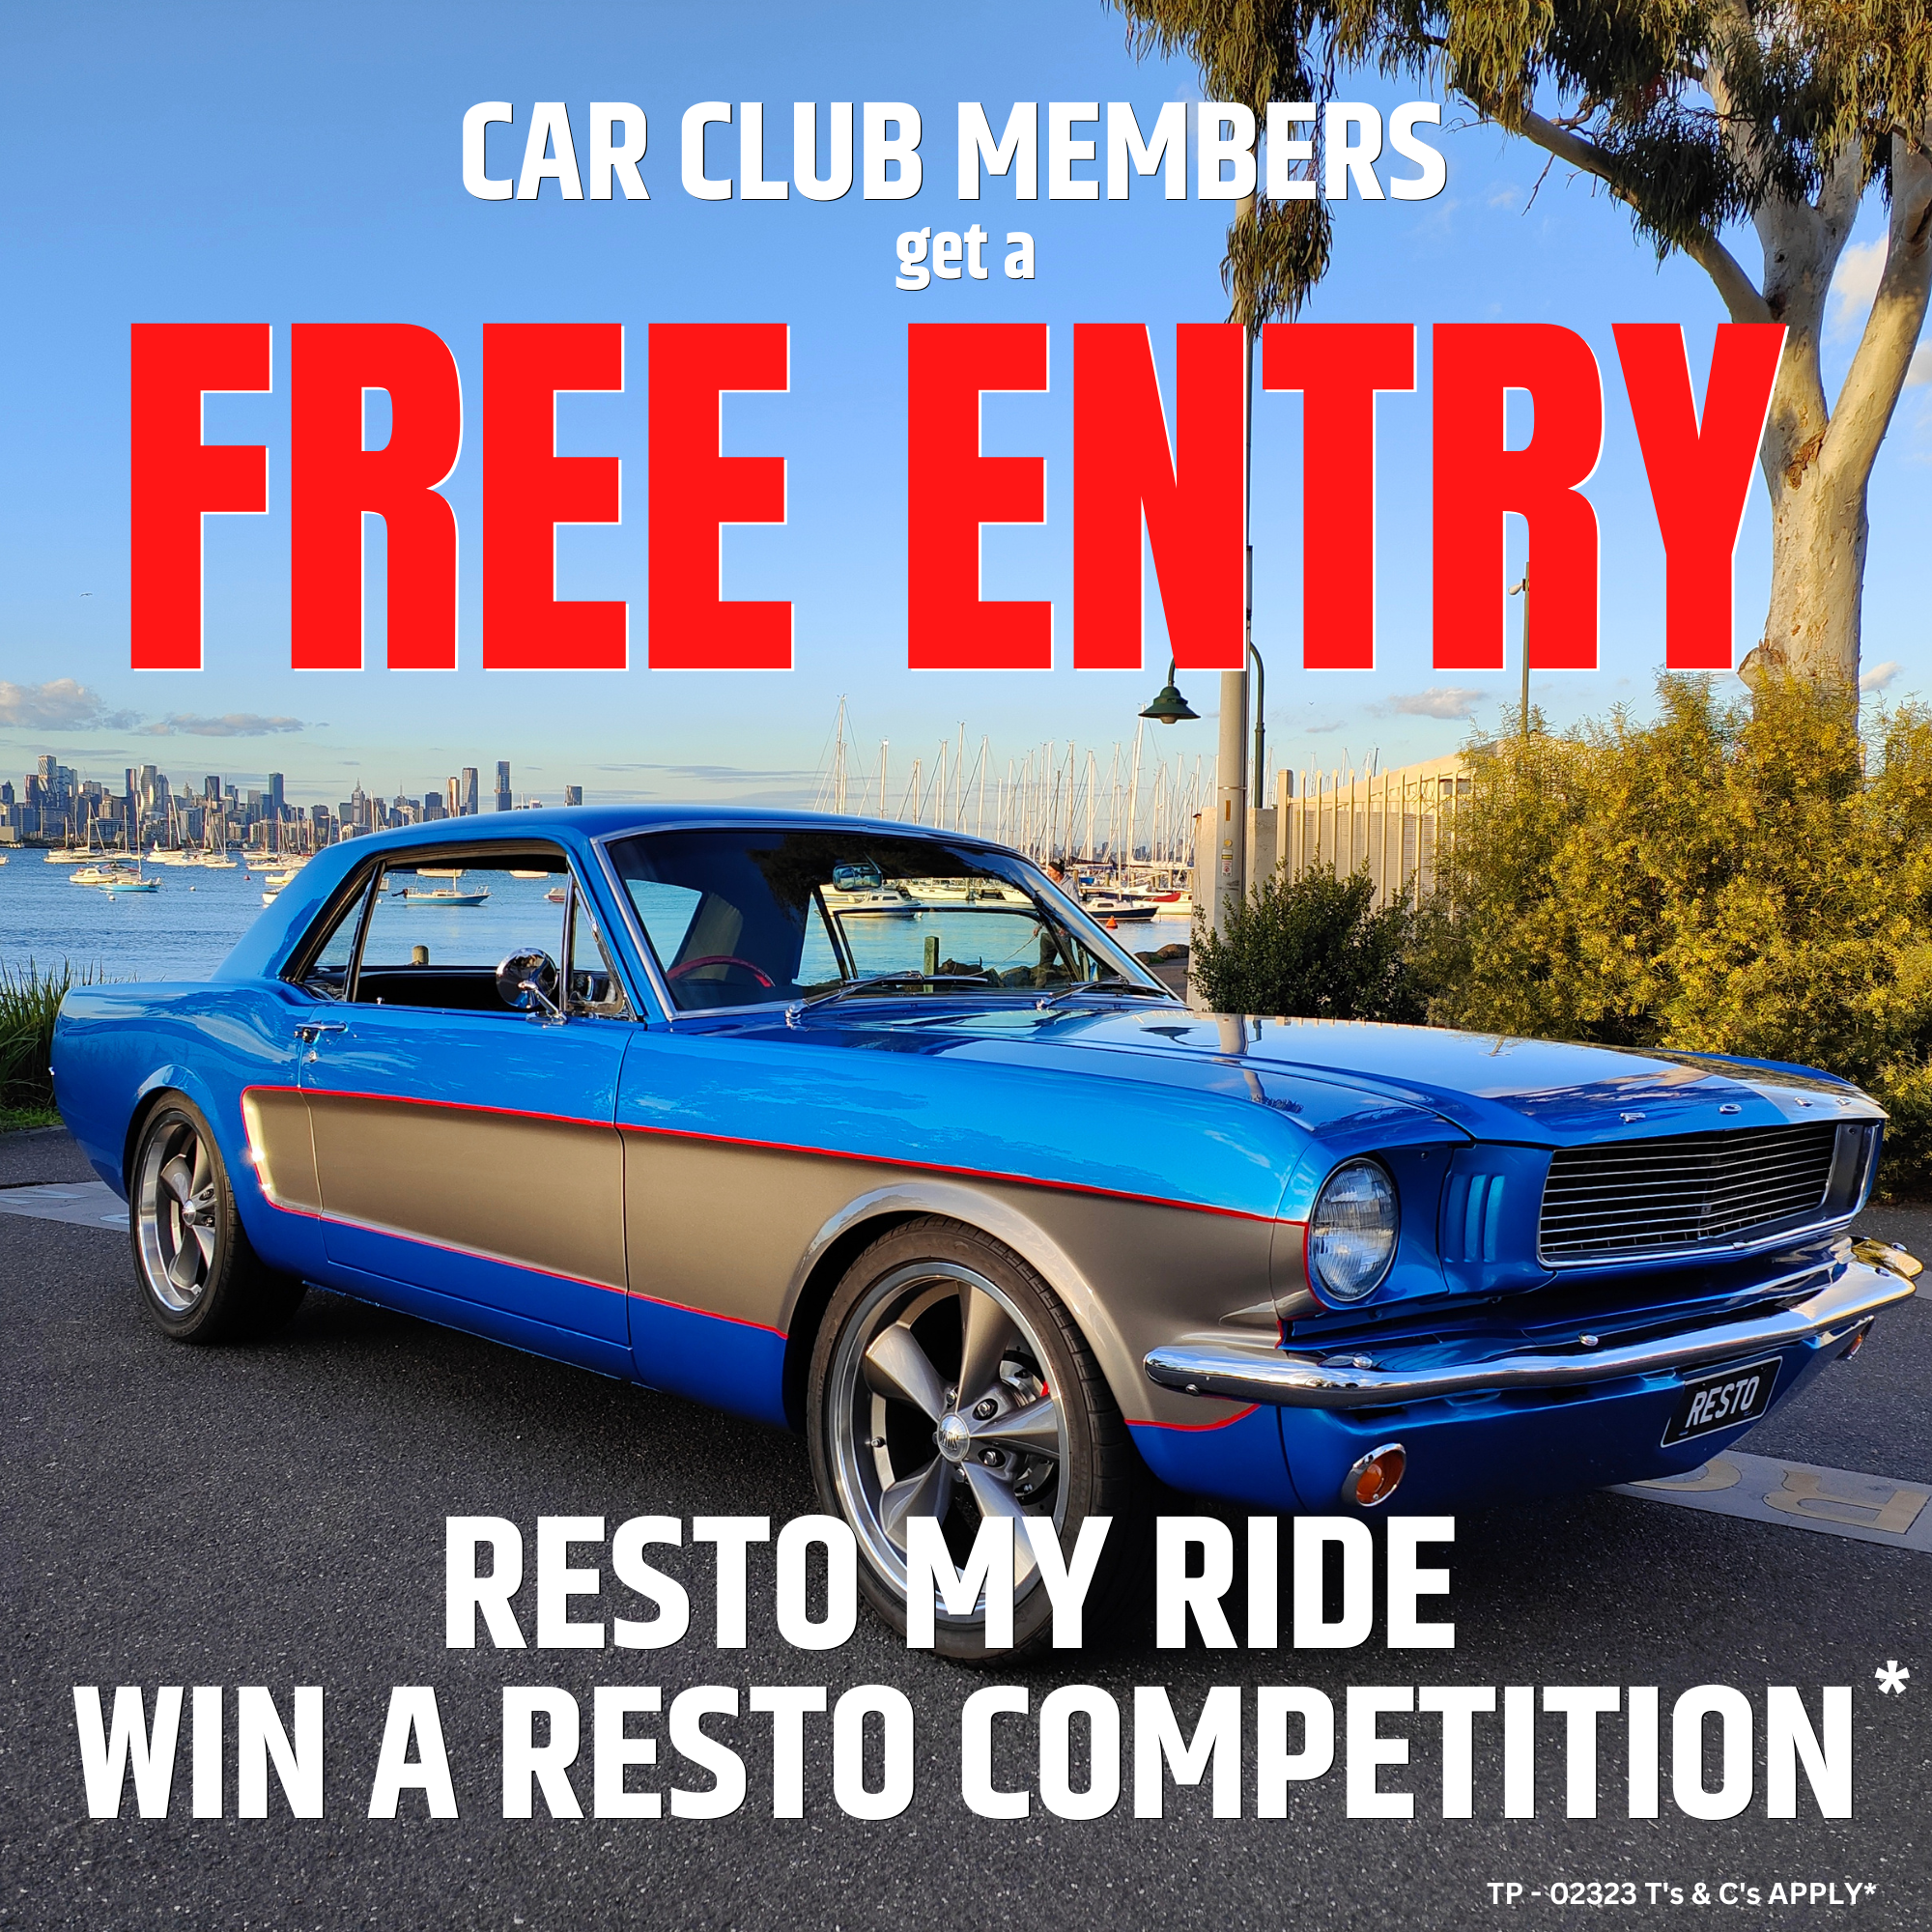 Free entry for Car Club Members